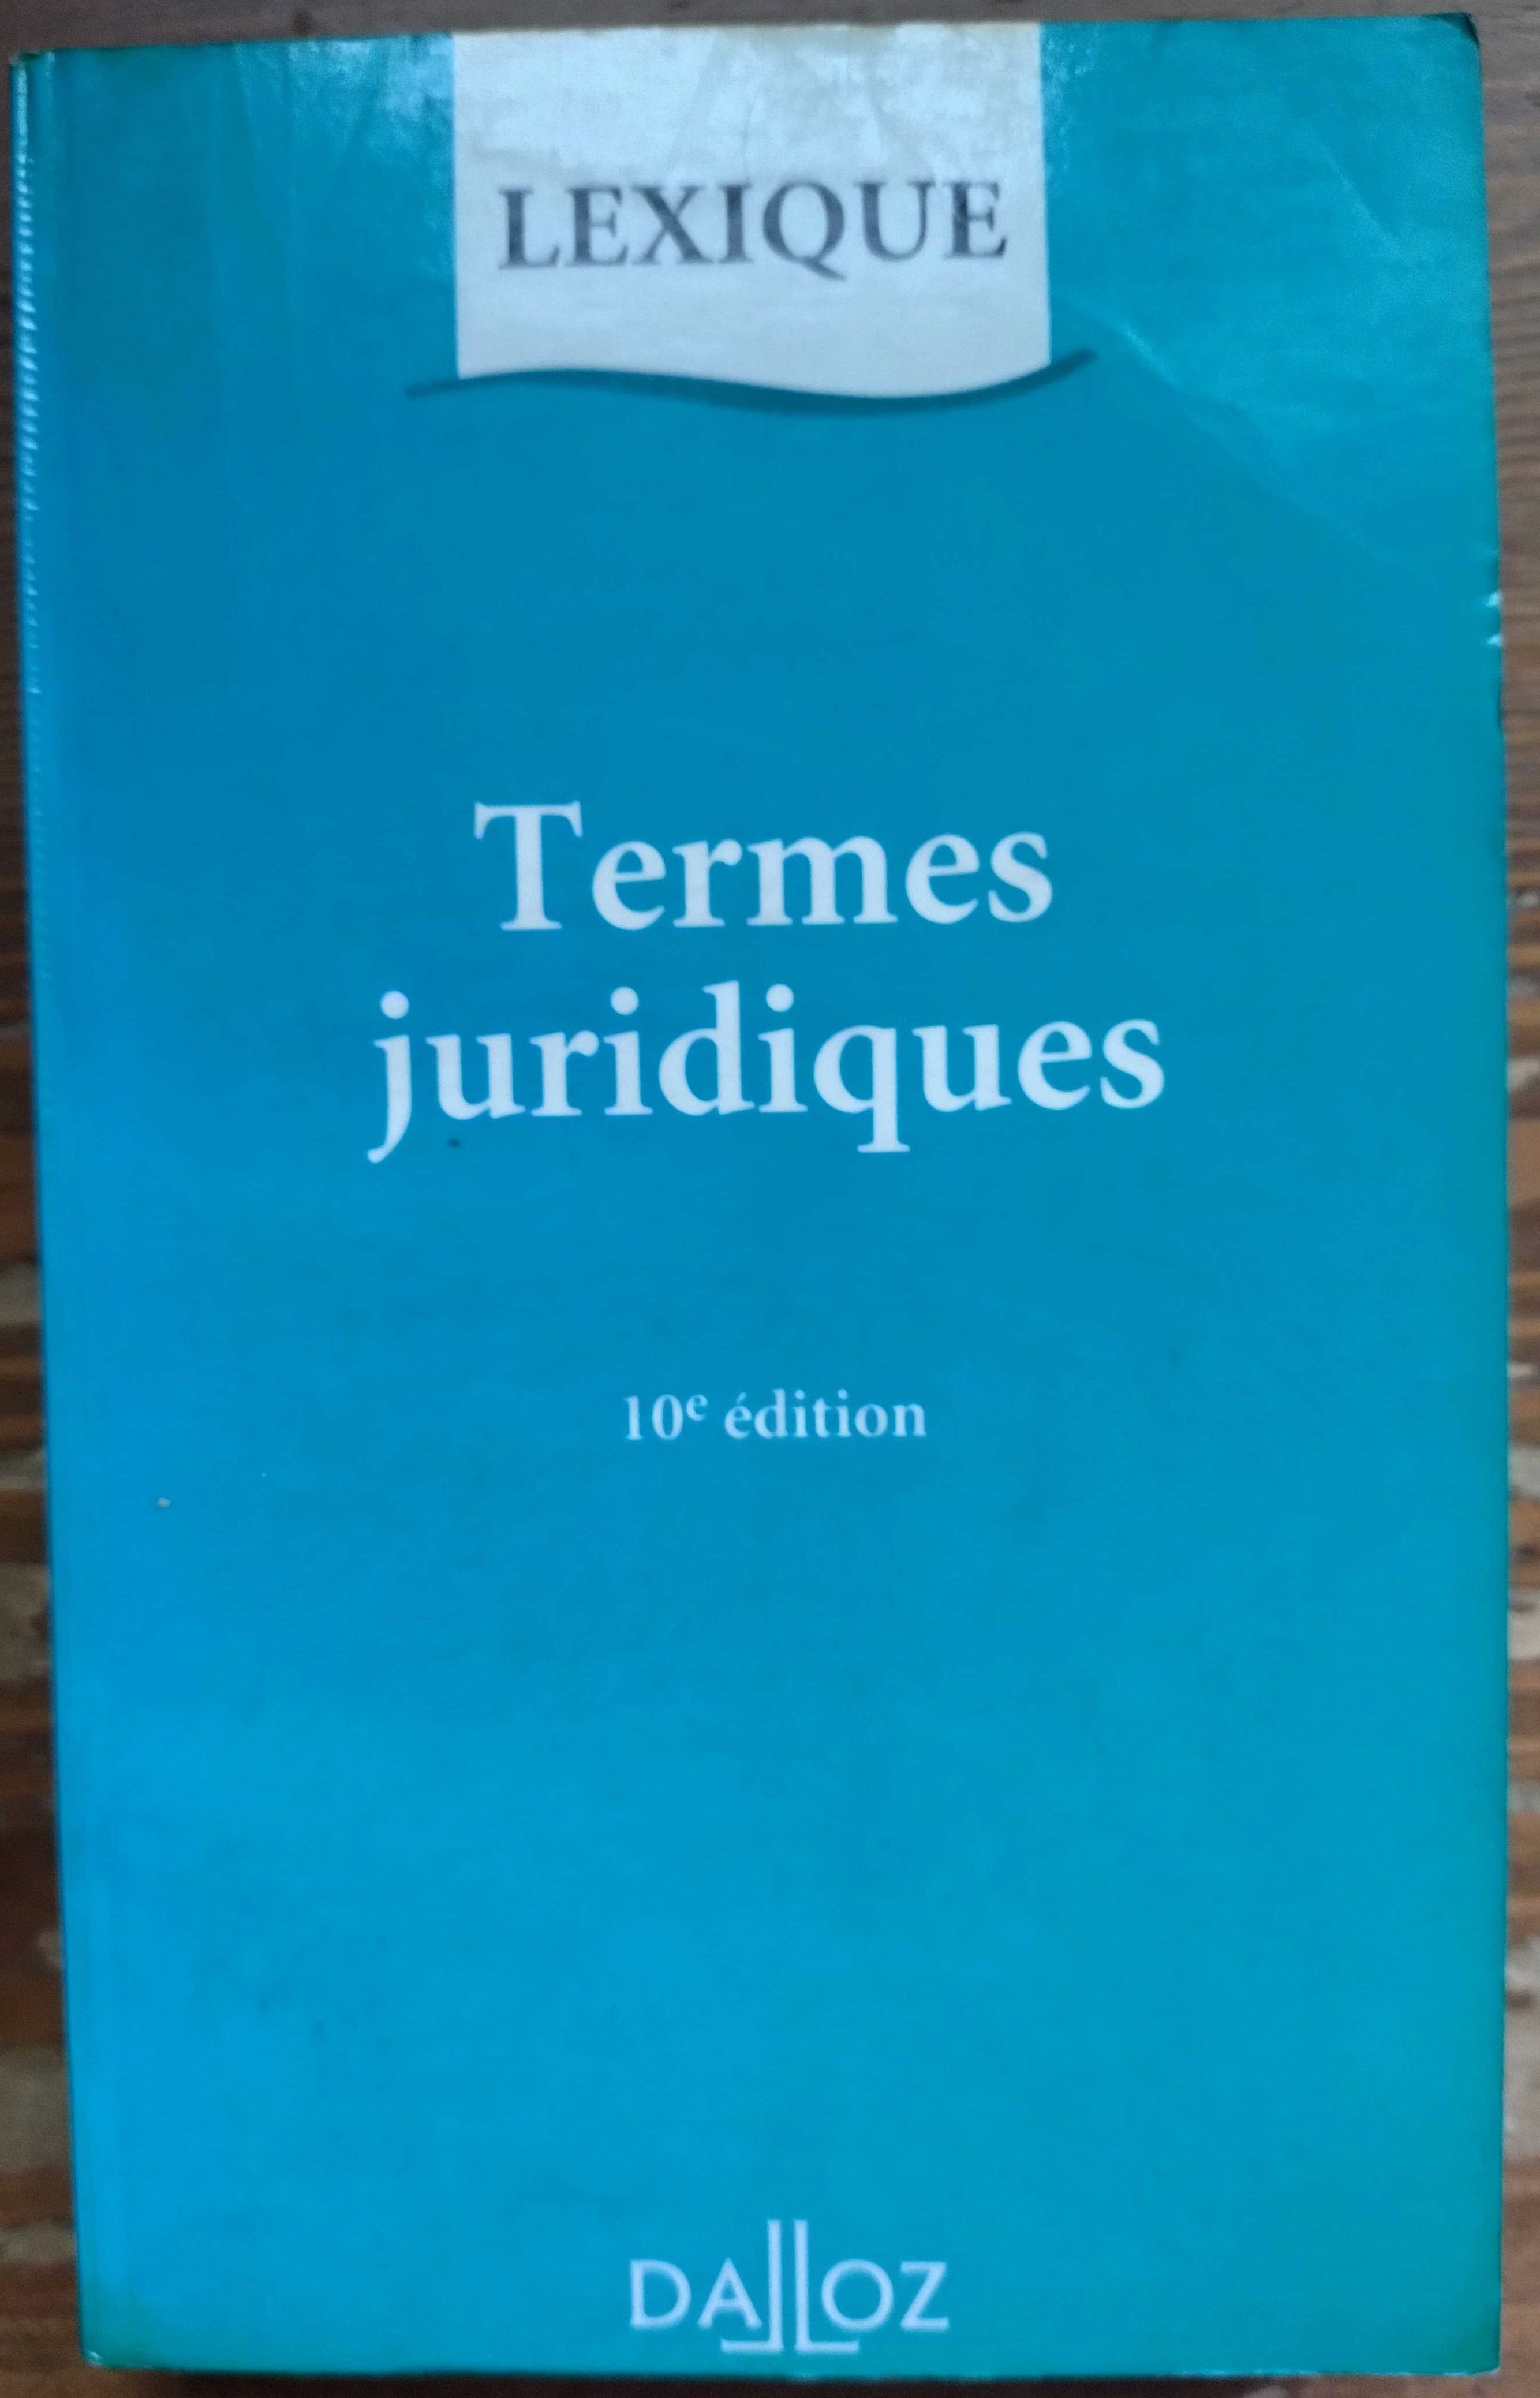 Książka francuska, Livres français, Lexique Termes juridiques Dalloz